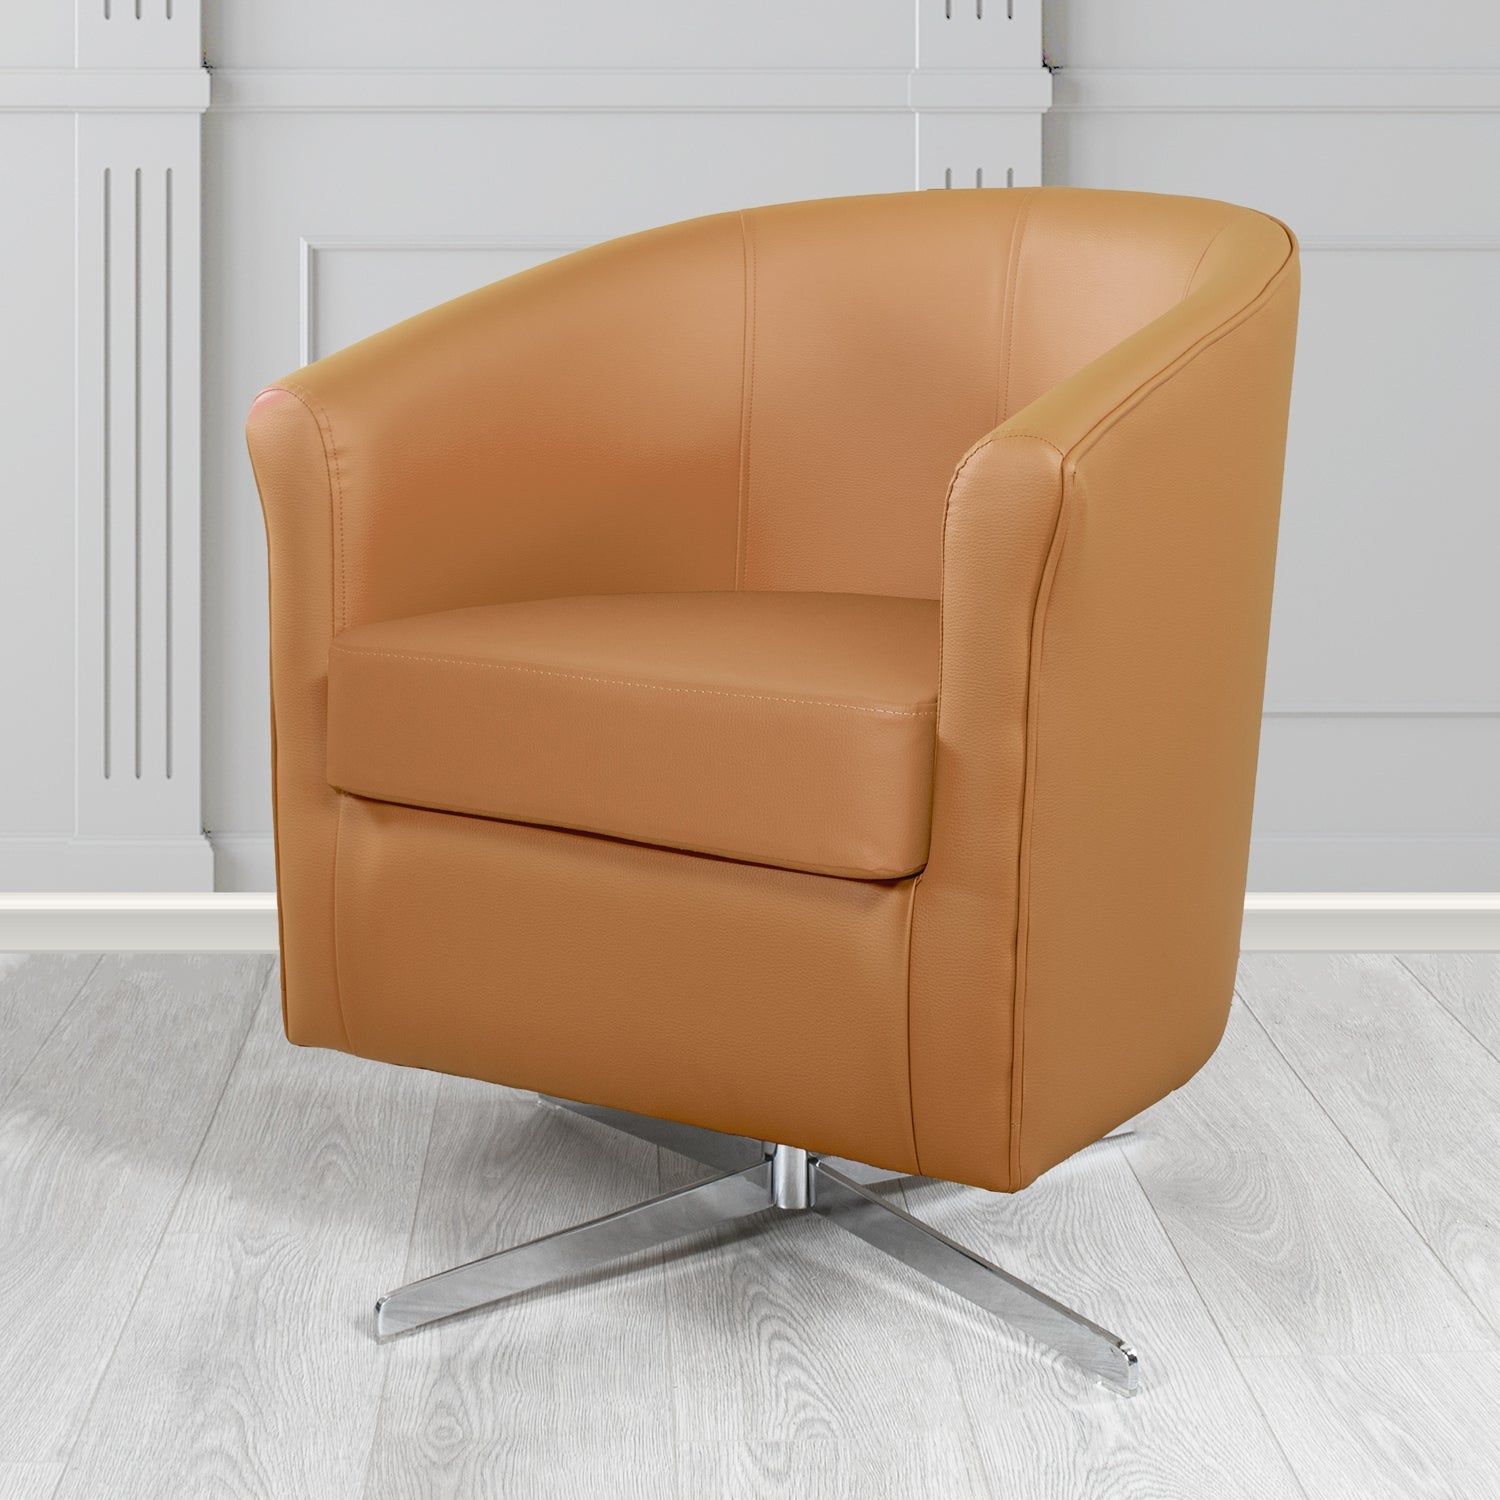 Cannes Swivel Tub Chair in Just Colour Fudge Crib 5 Faux Leather - The Tub Chair Shop